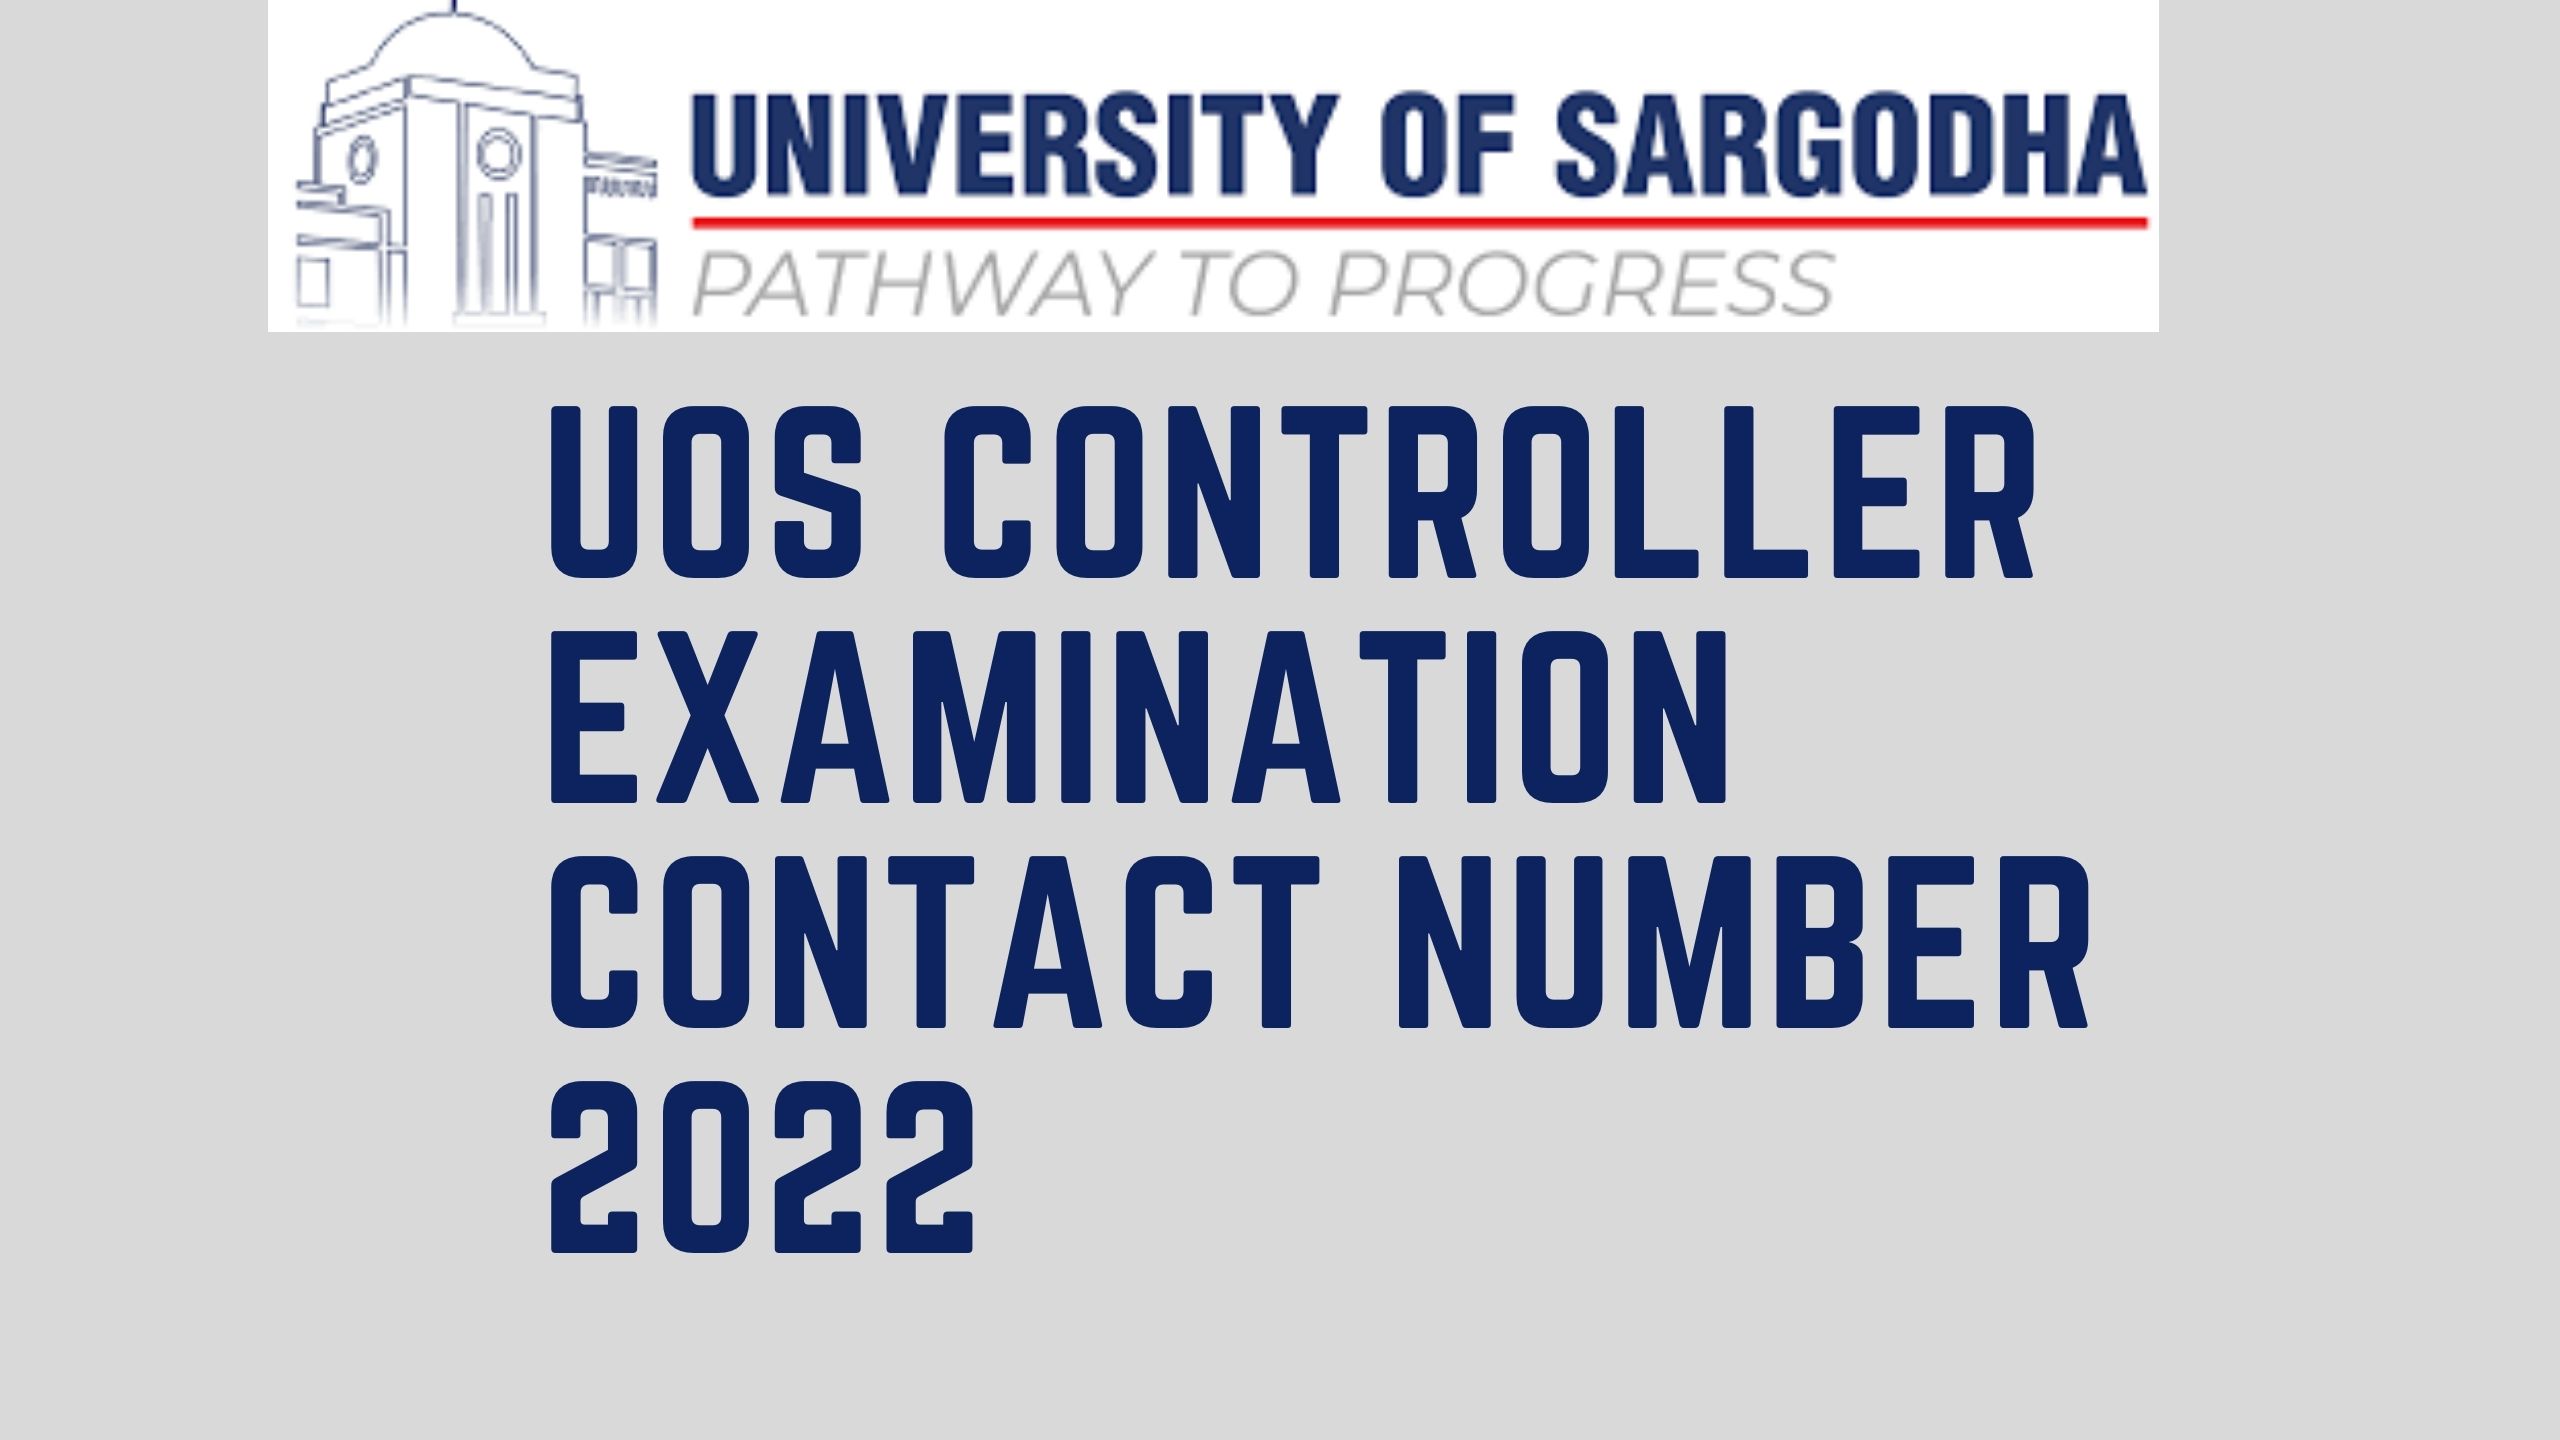 UOS Controller Examination Contact Number 2022